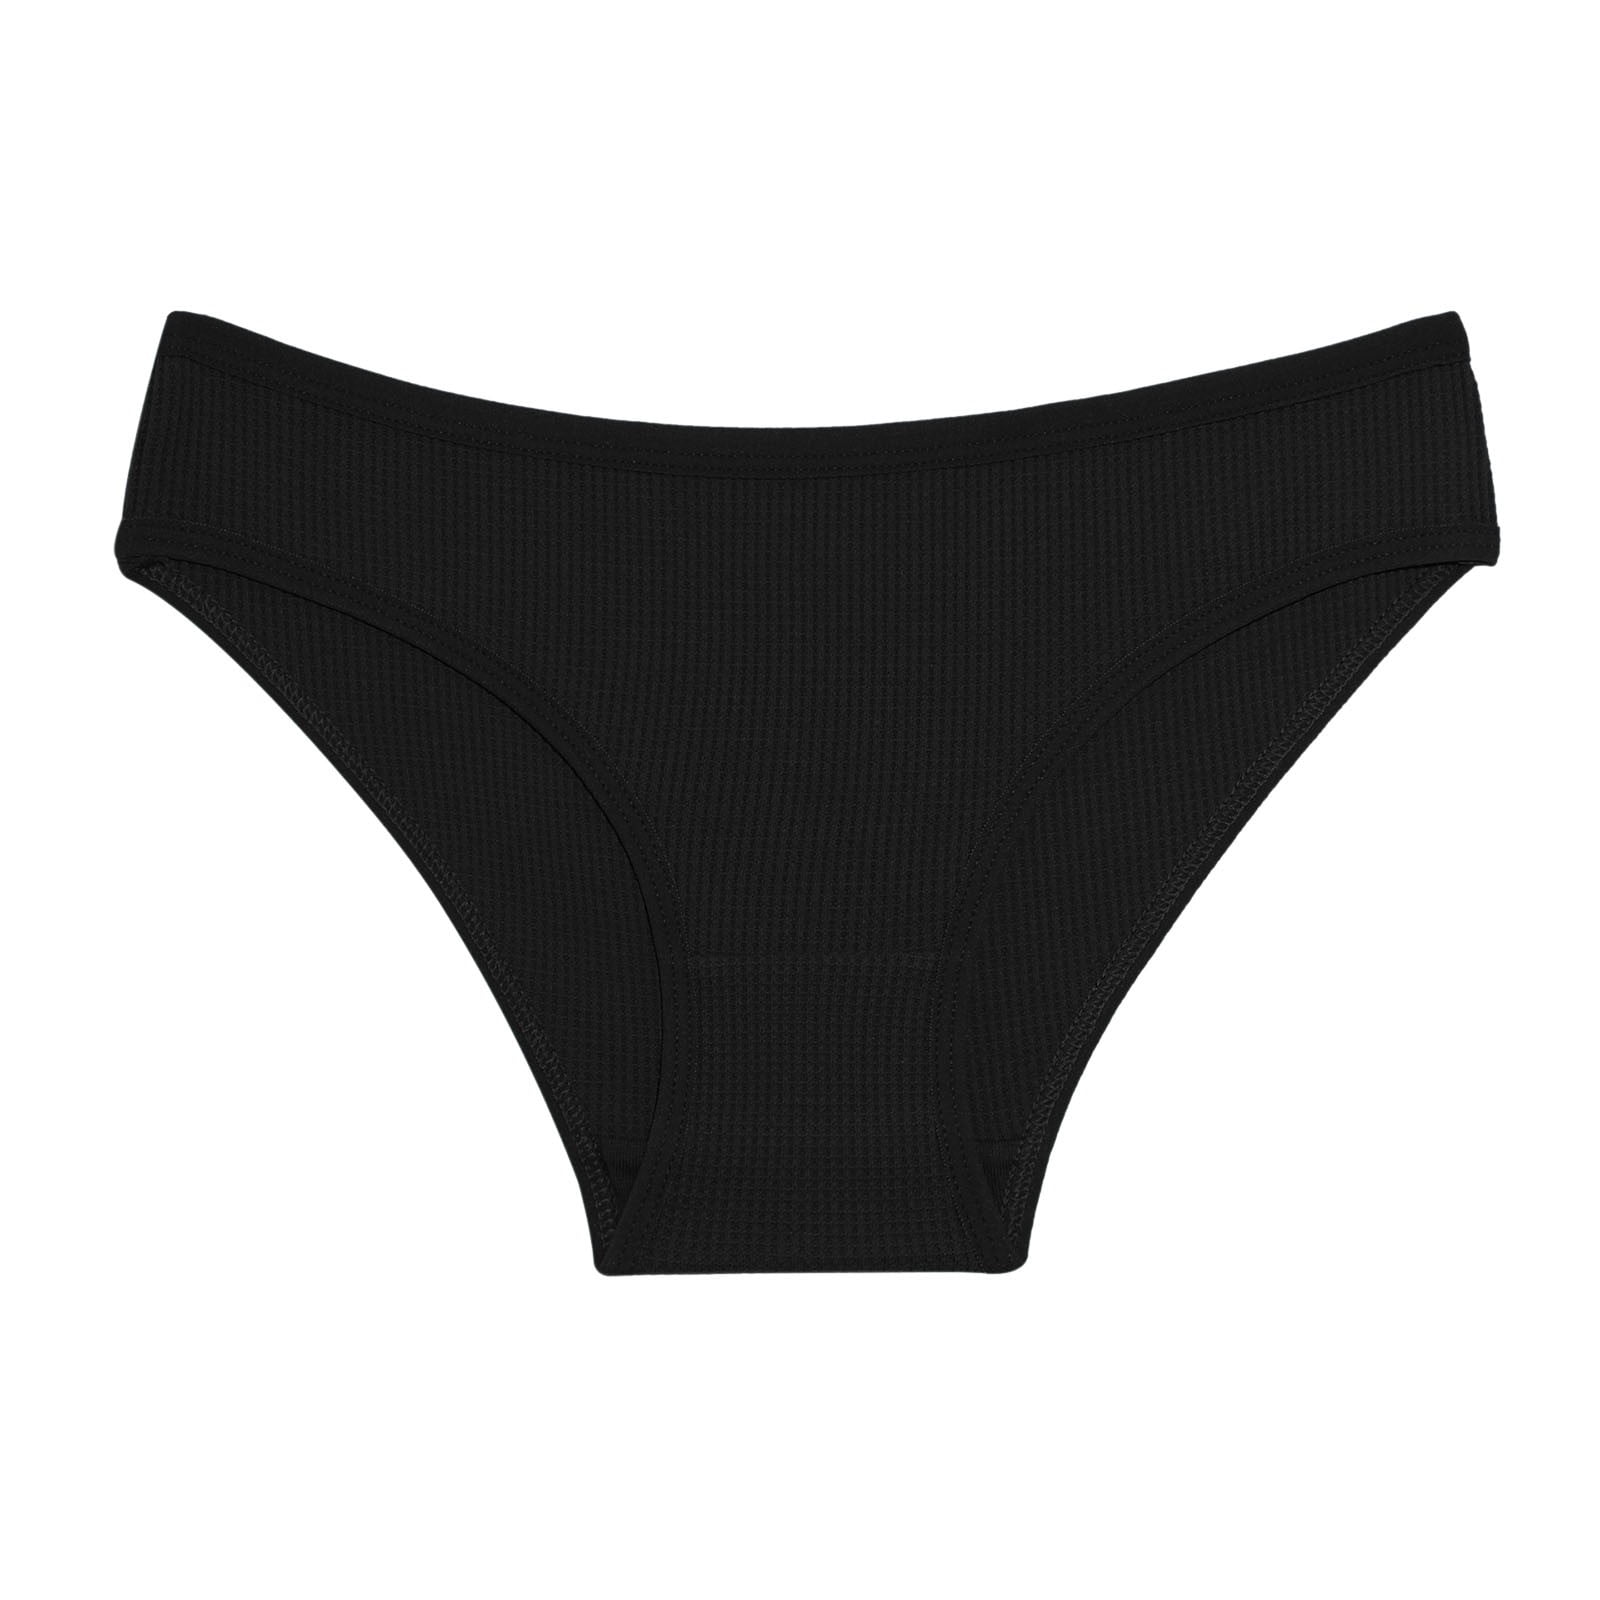 Aayomet Panties For Women Women Solid Women's Color Lingerie Panties  Underwear Seamless Hollow Out Women's Panties,Black M 